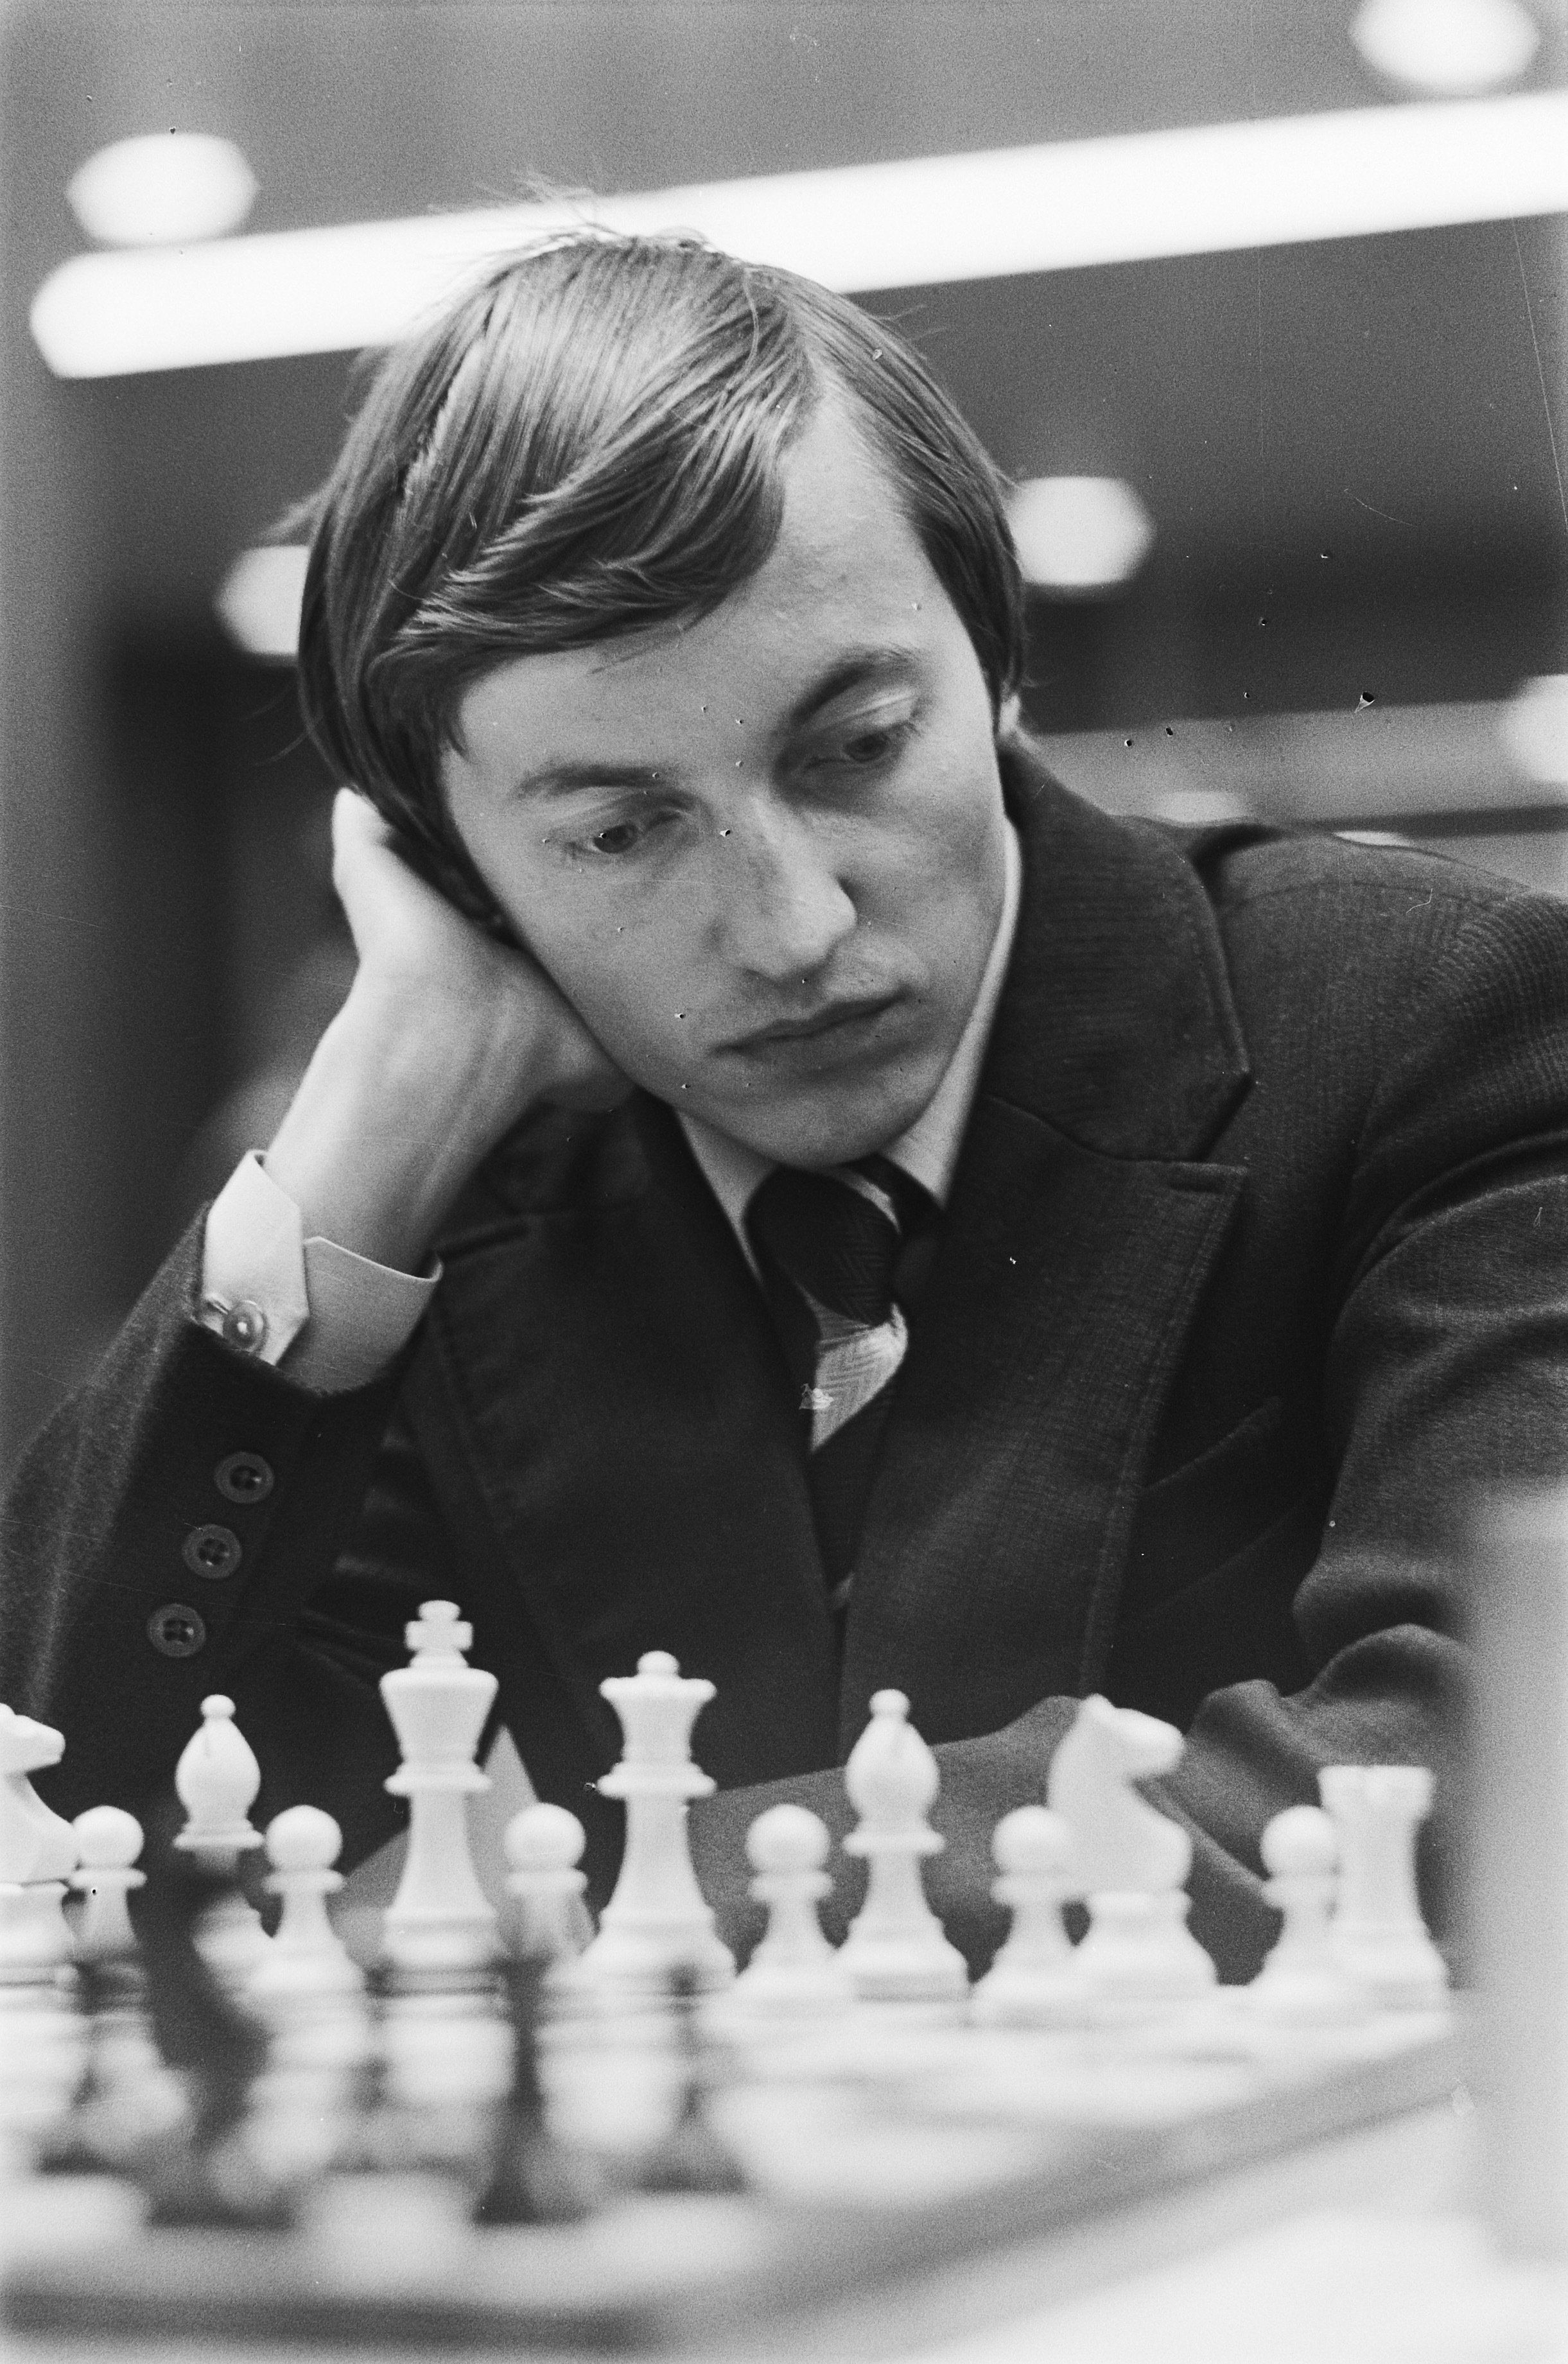 5 Top Chess Principles According to Anatoly Karpov - TheChessWorld